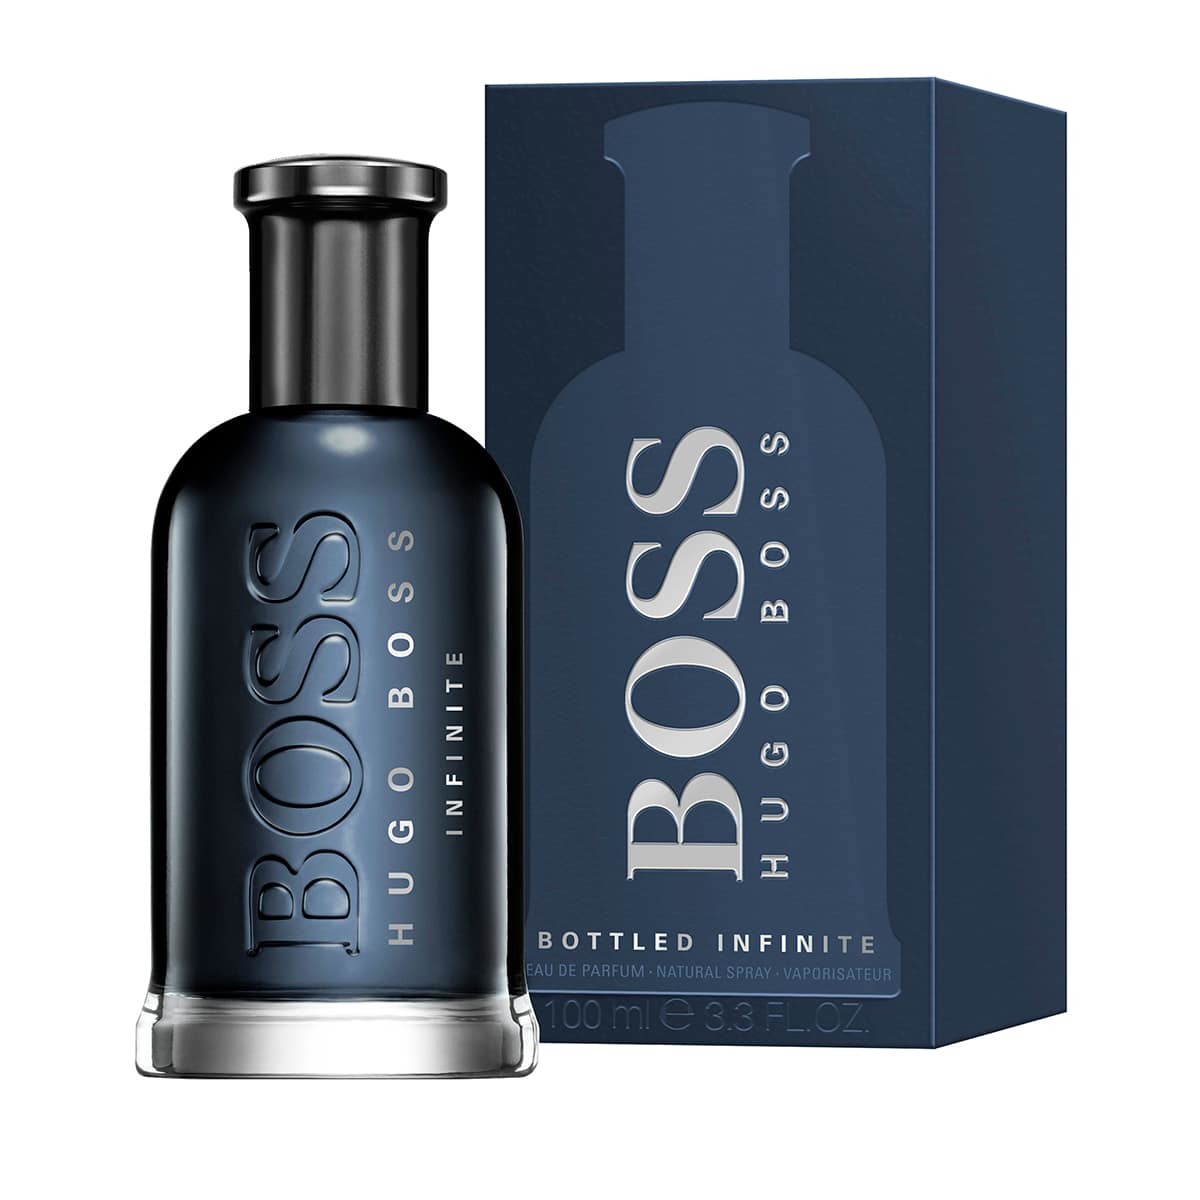  Hugo Boss Bottled Infinite Eau de Parfum